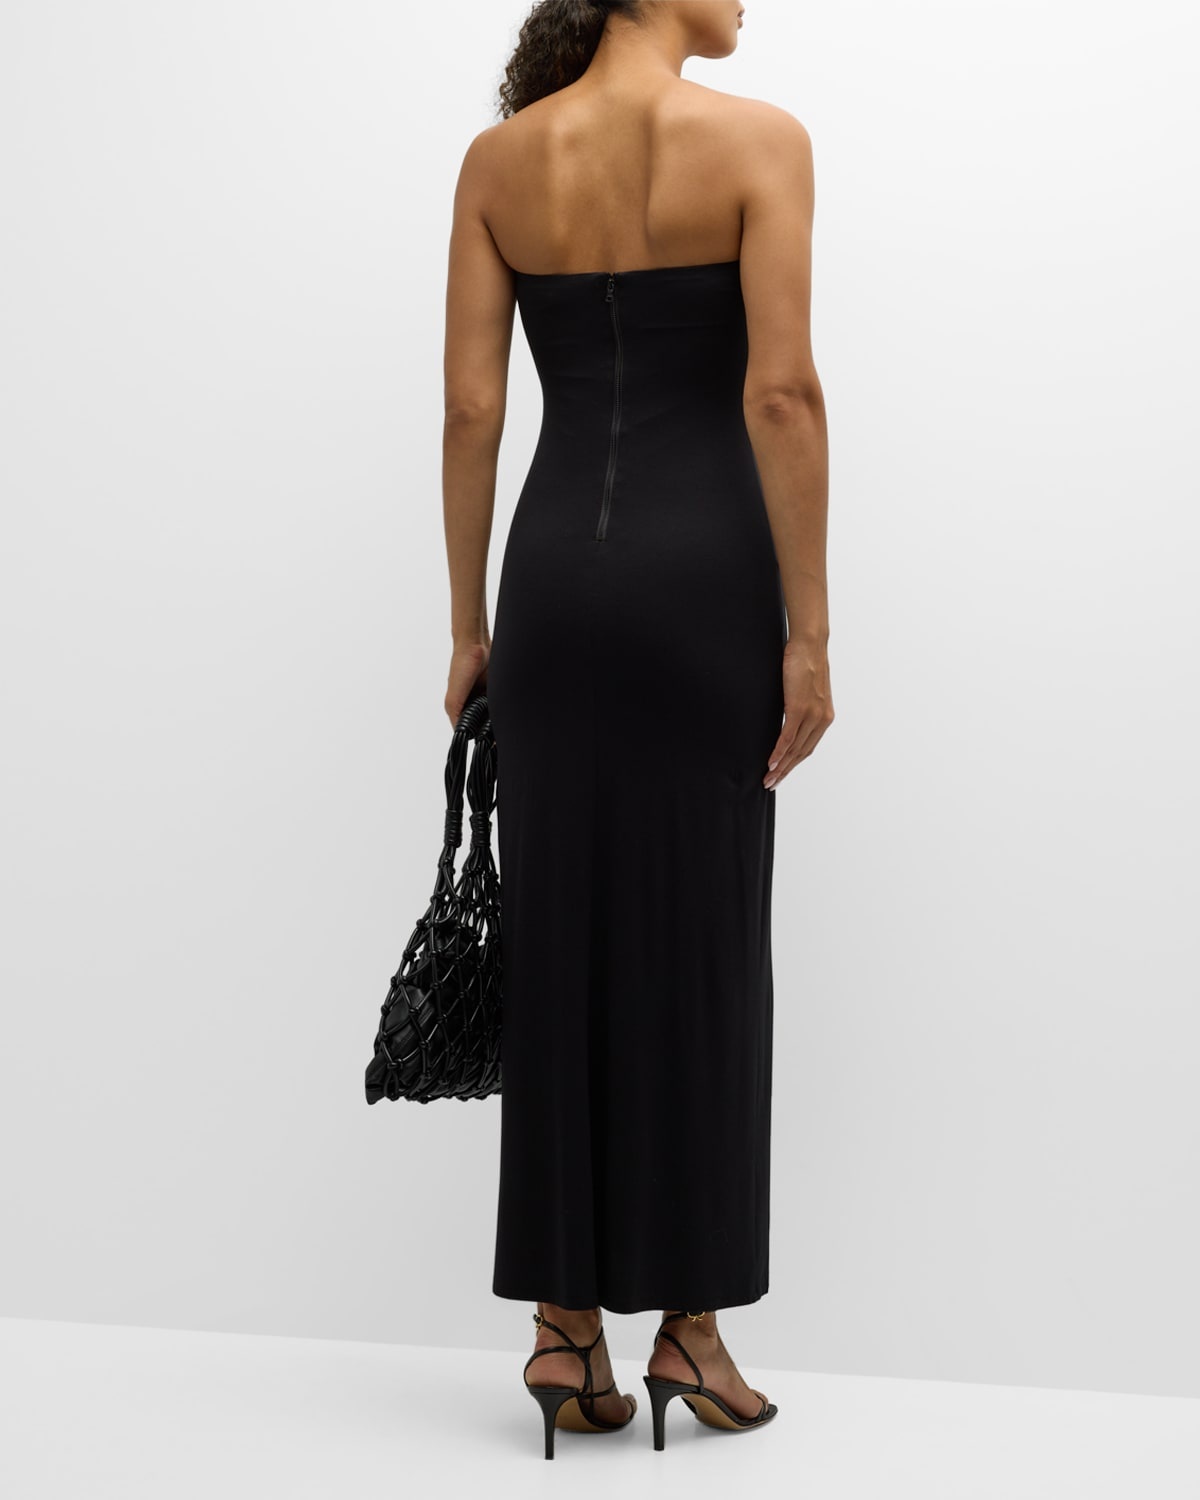 Delora Strapless Midi Dress - 6